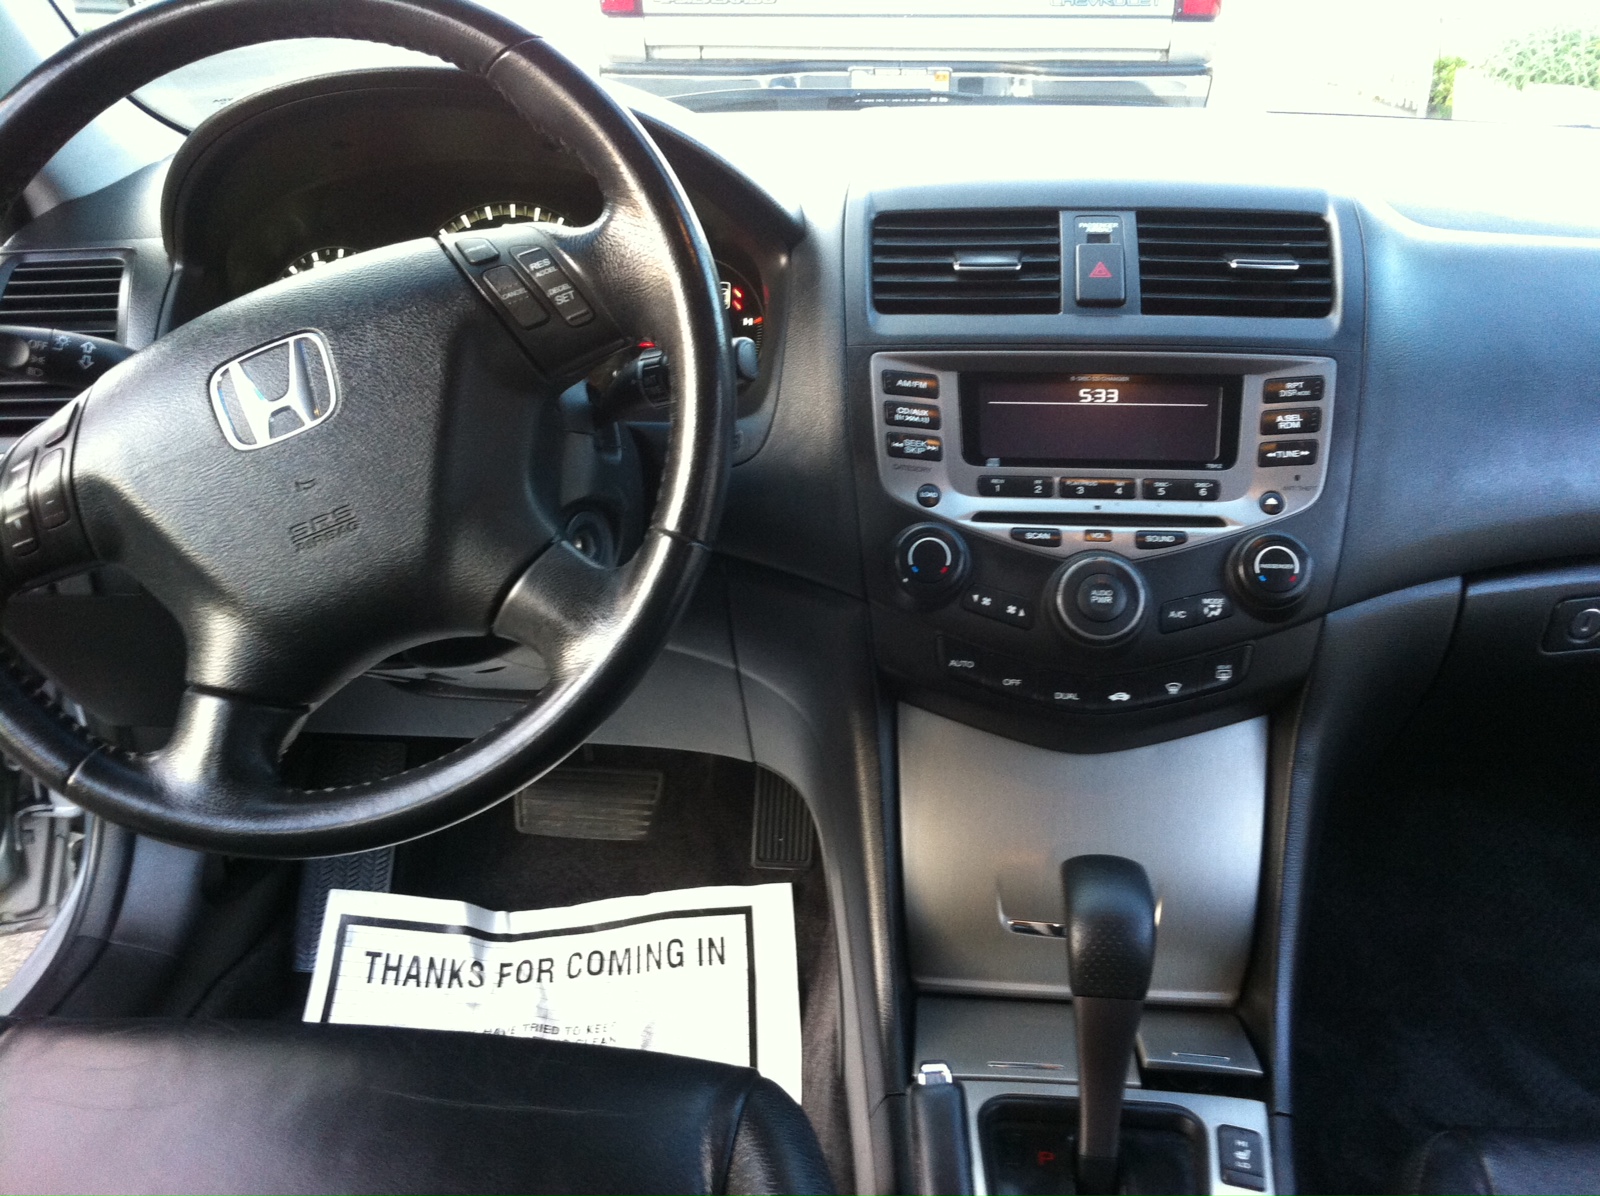 2006 Honda accord leather interior #6